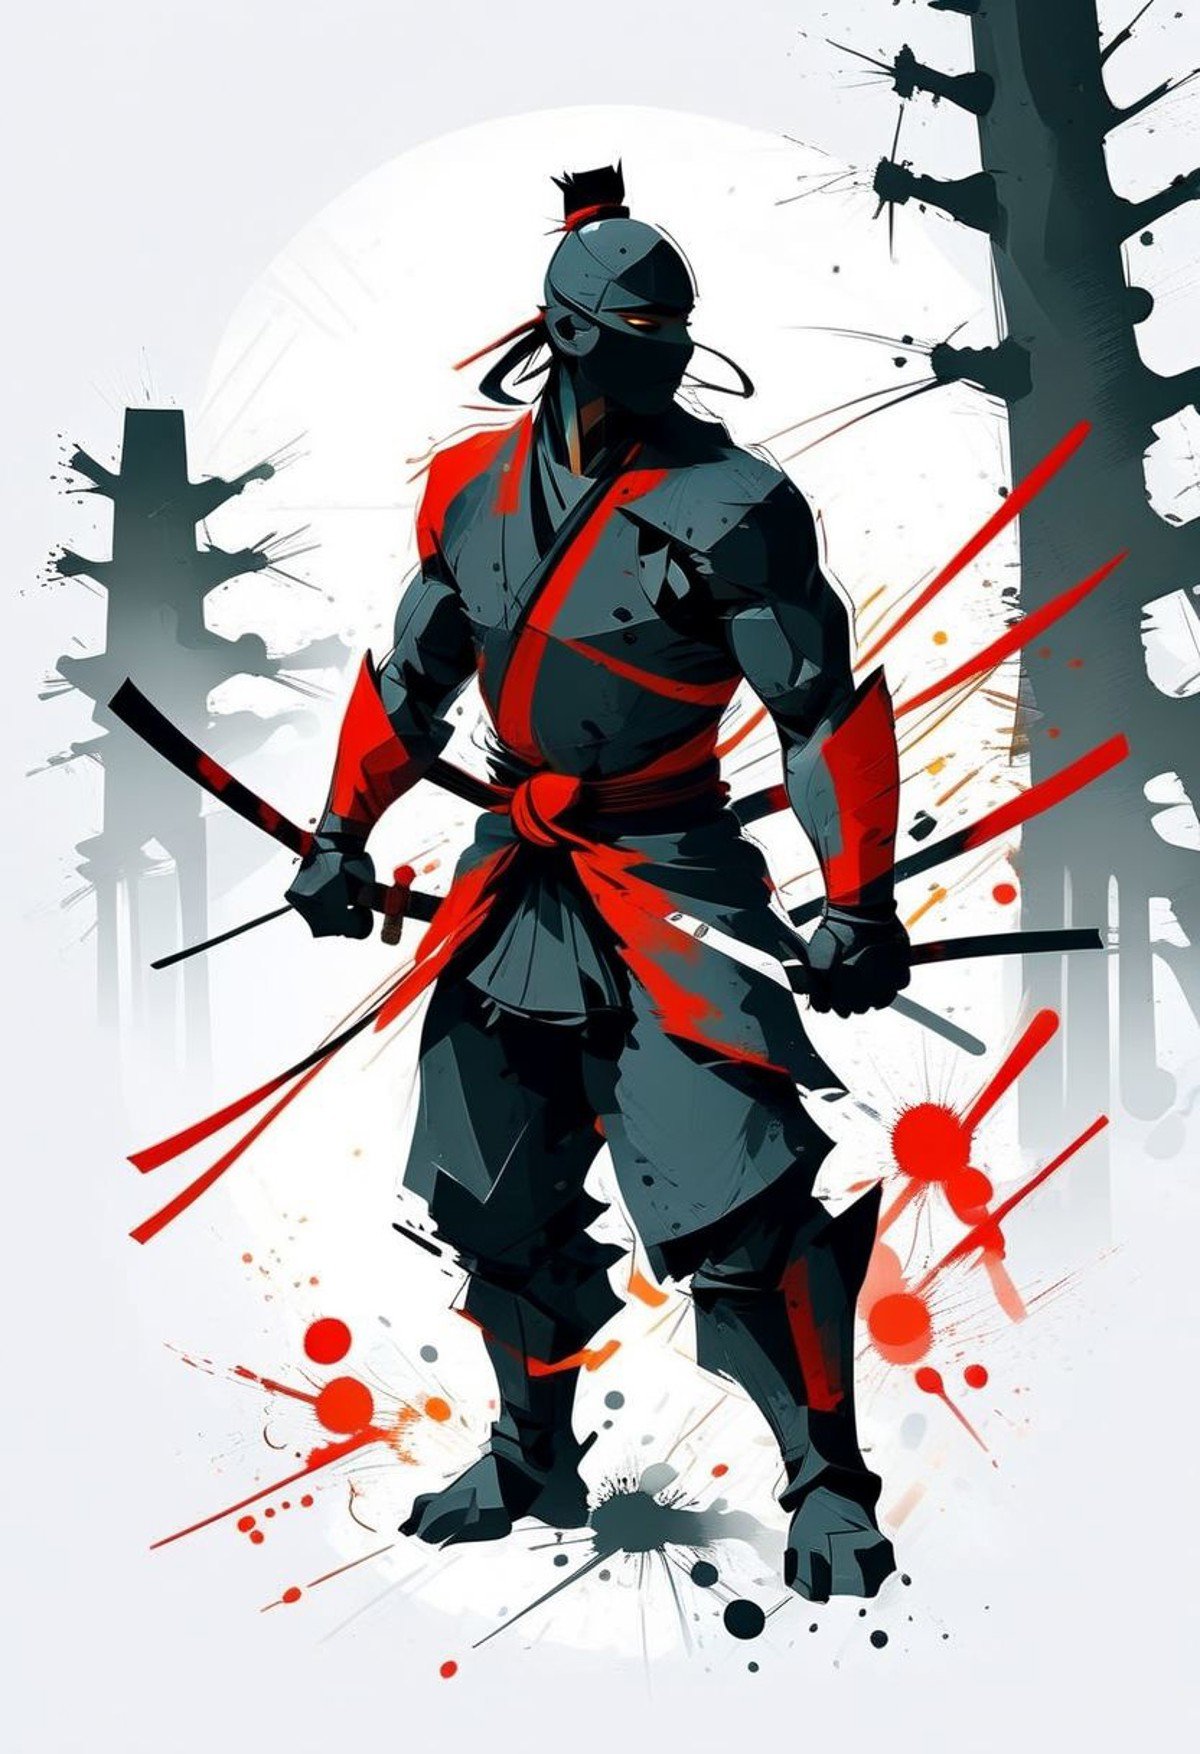 samurai at forest, colorart